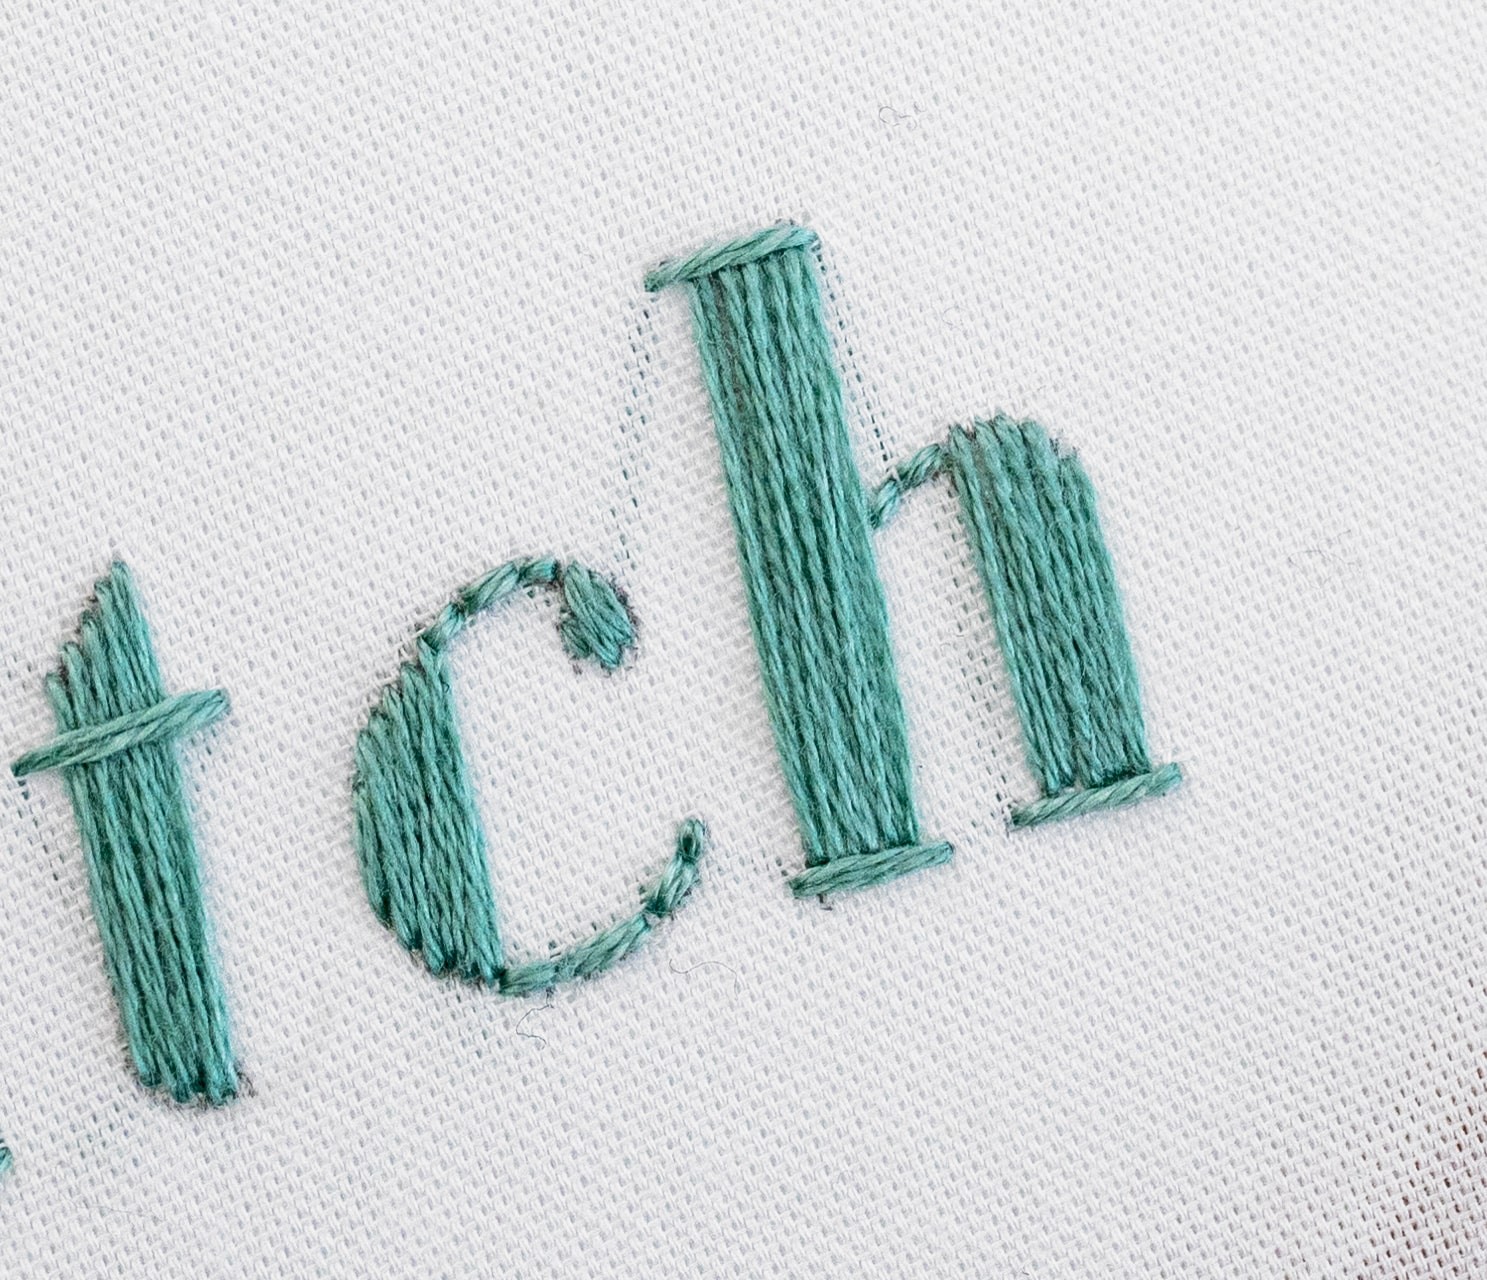 The word 'satin stitch' is stitched using satin stitch.